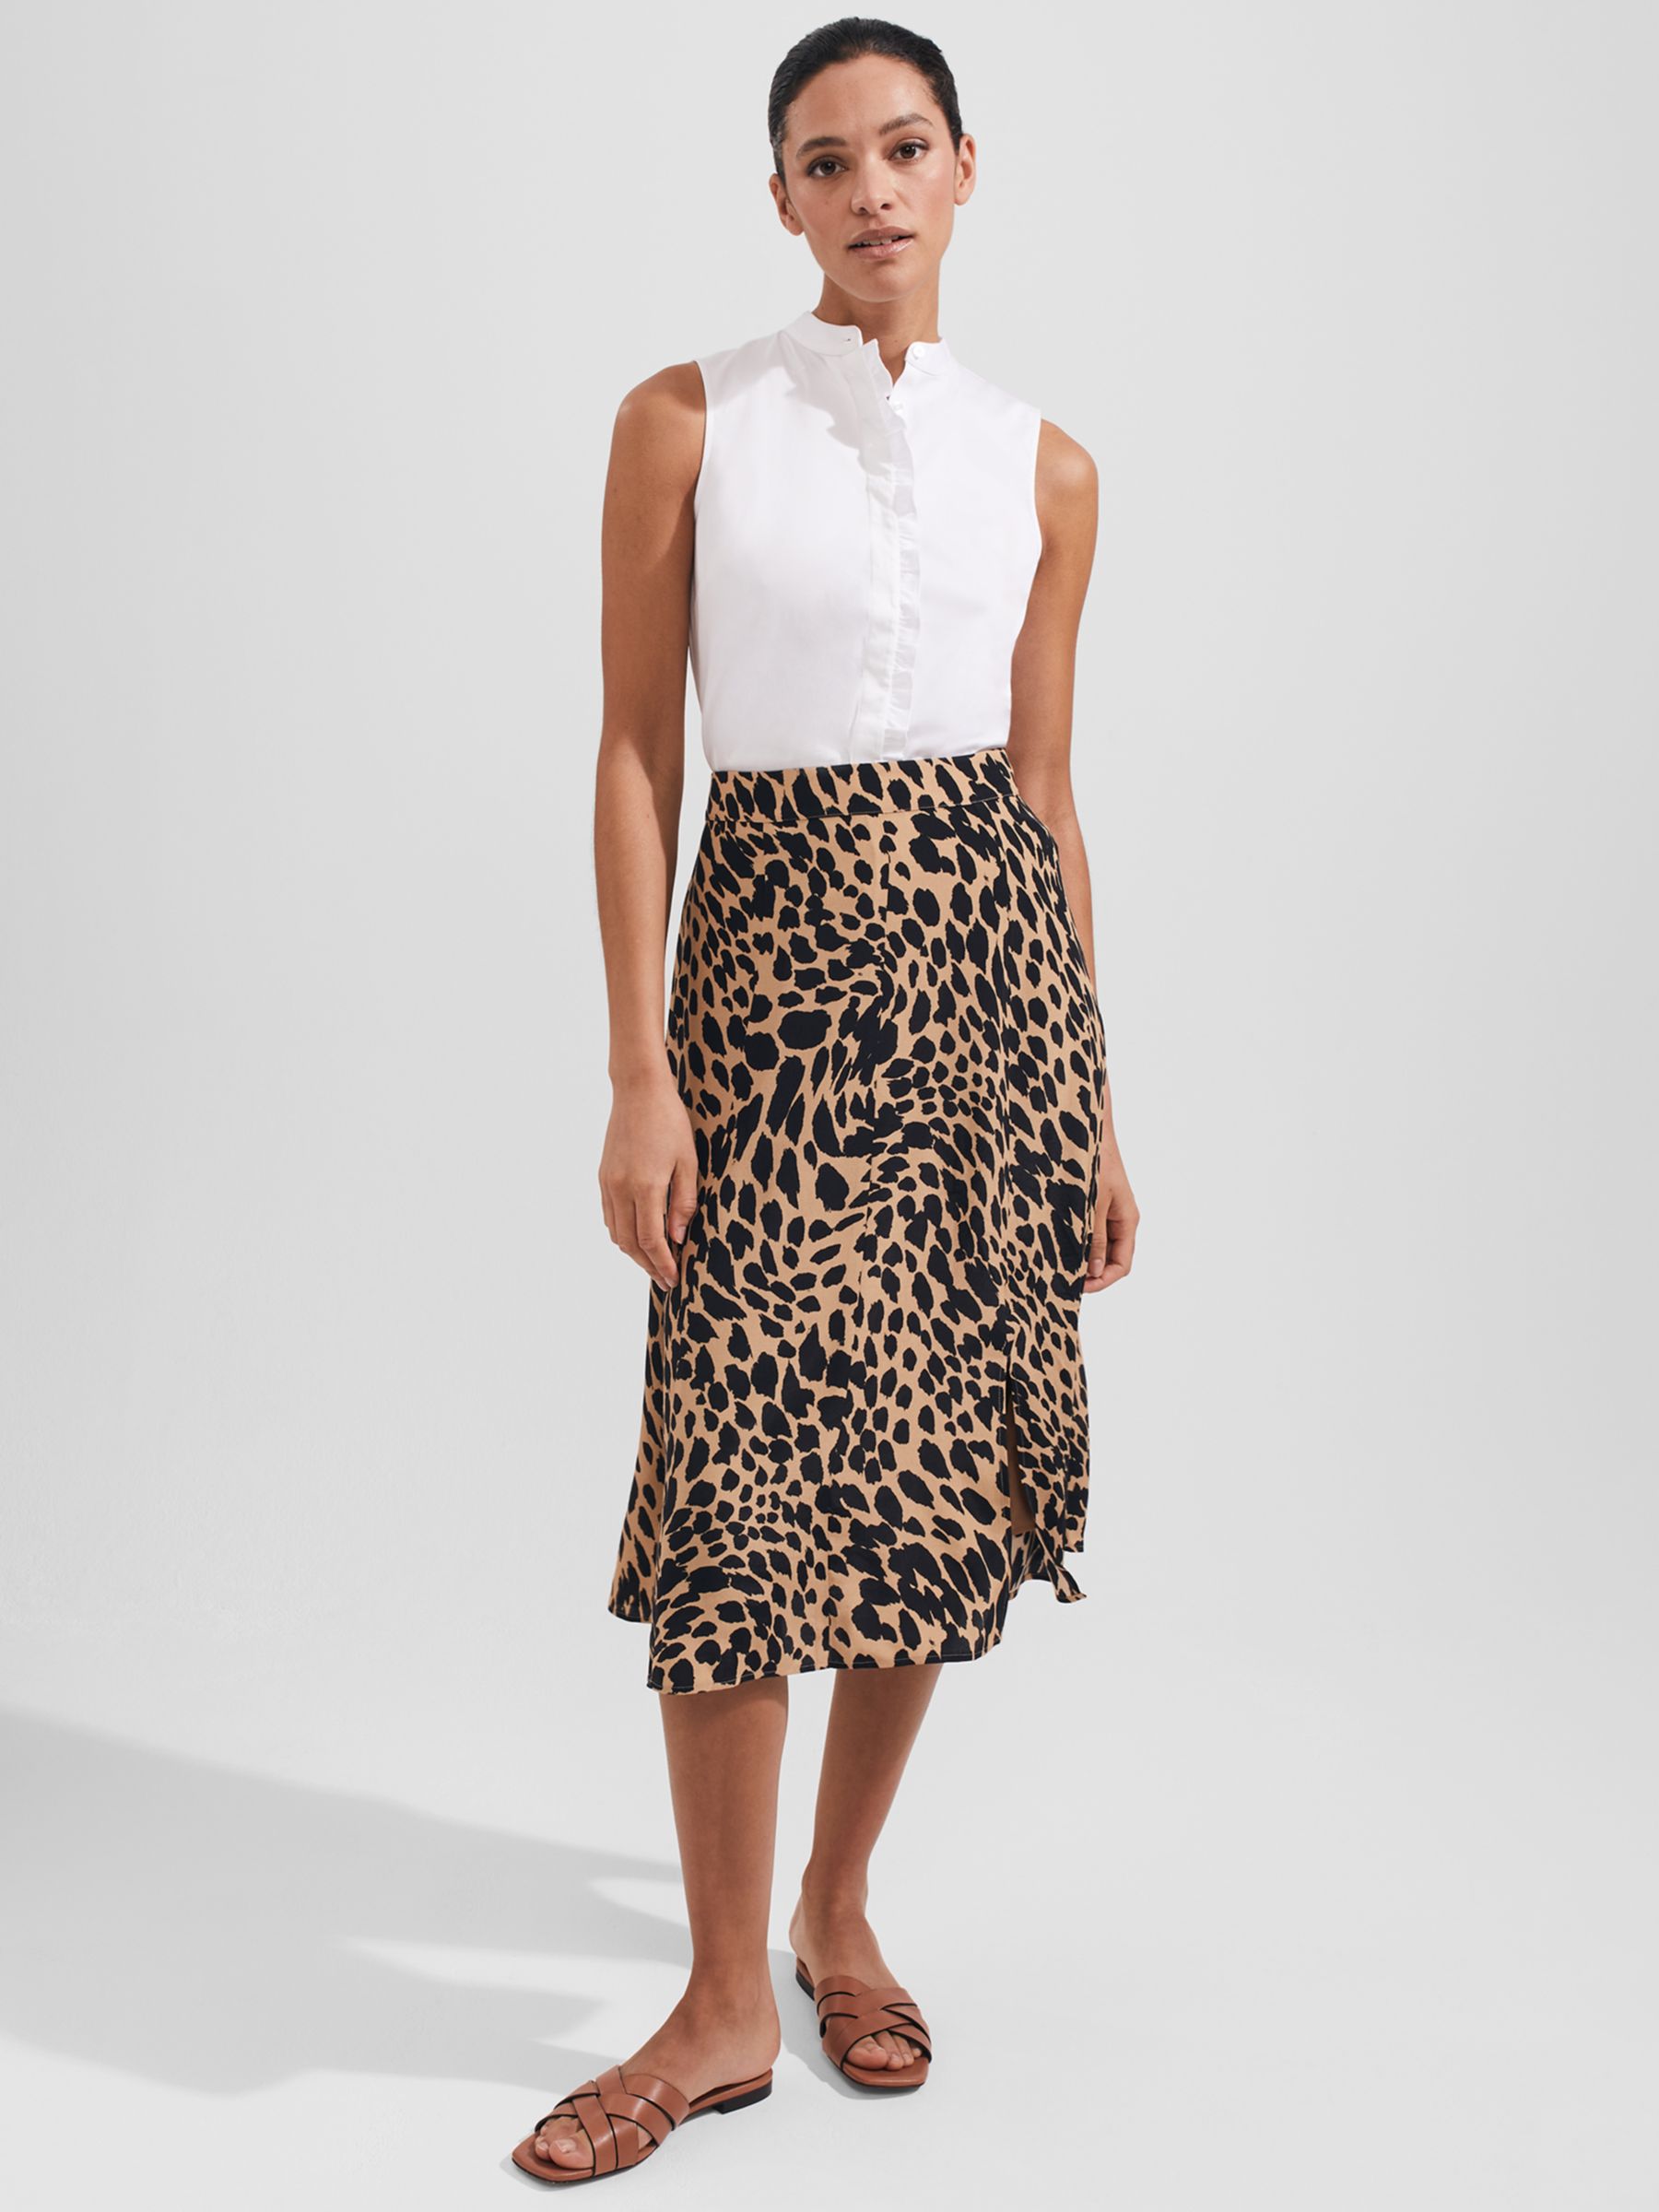 Hobbs Daphne Animal Print Skirt, Camel/Black, 6